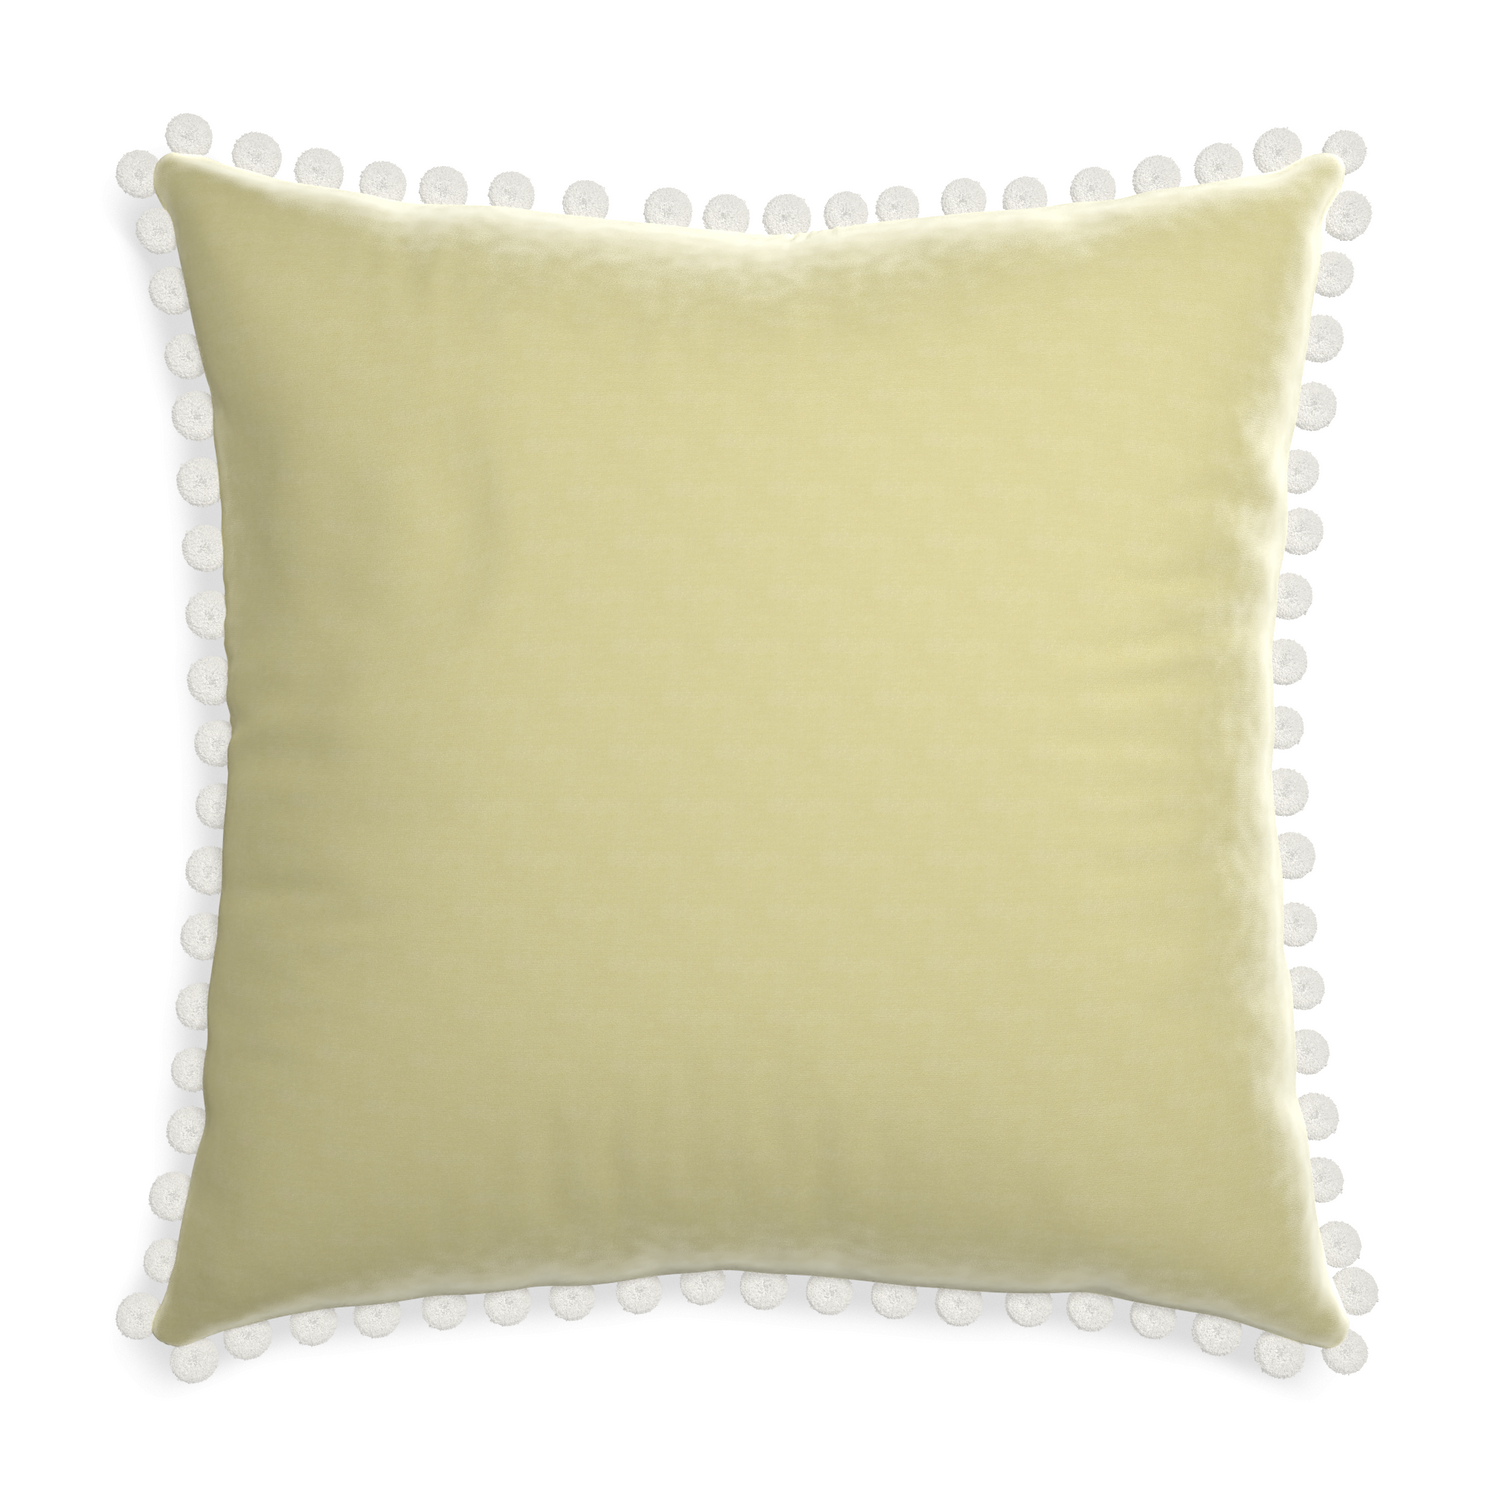 square light green pillow with white pom poms